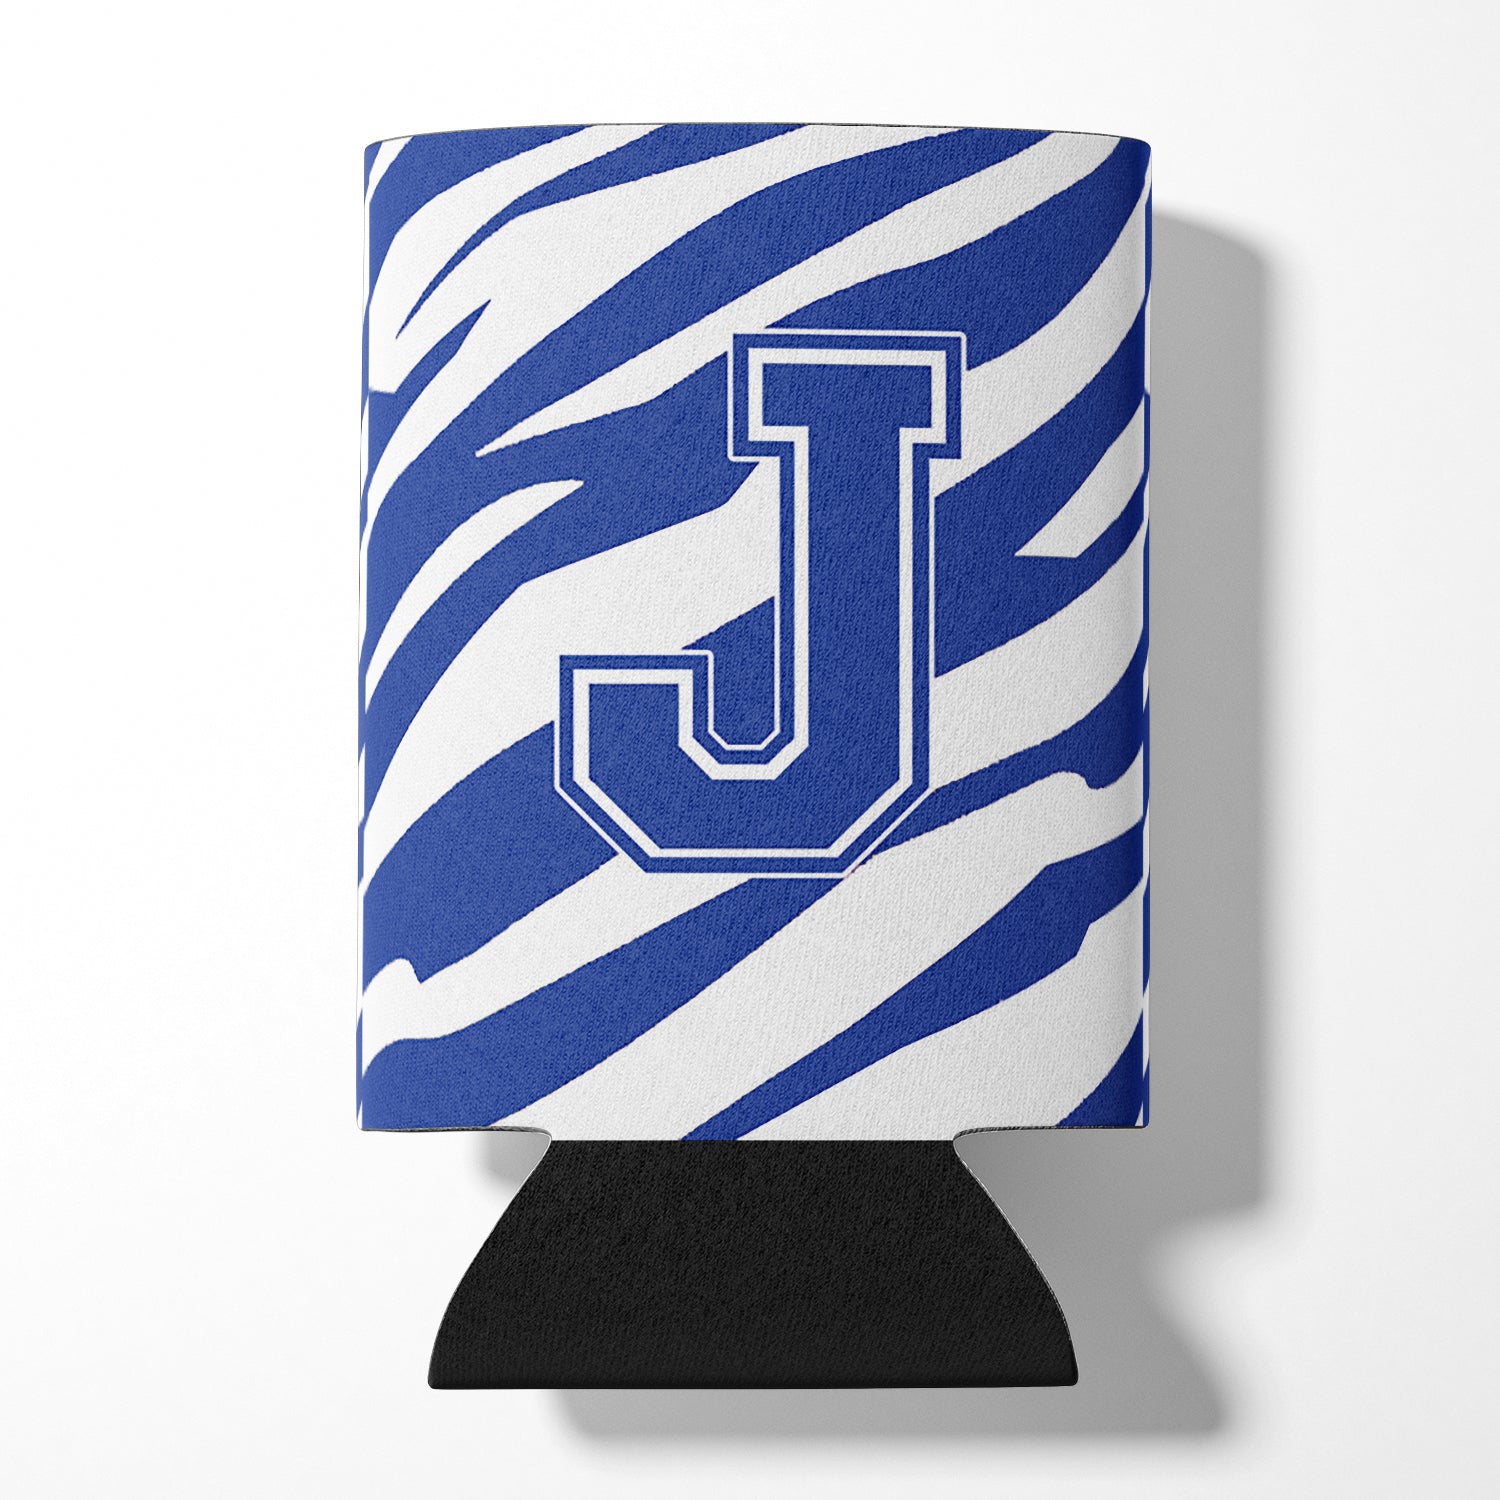 Monogramme initial de la lettre J - Tiger Stripe Blue and White Can Beverage Insulator Hugger